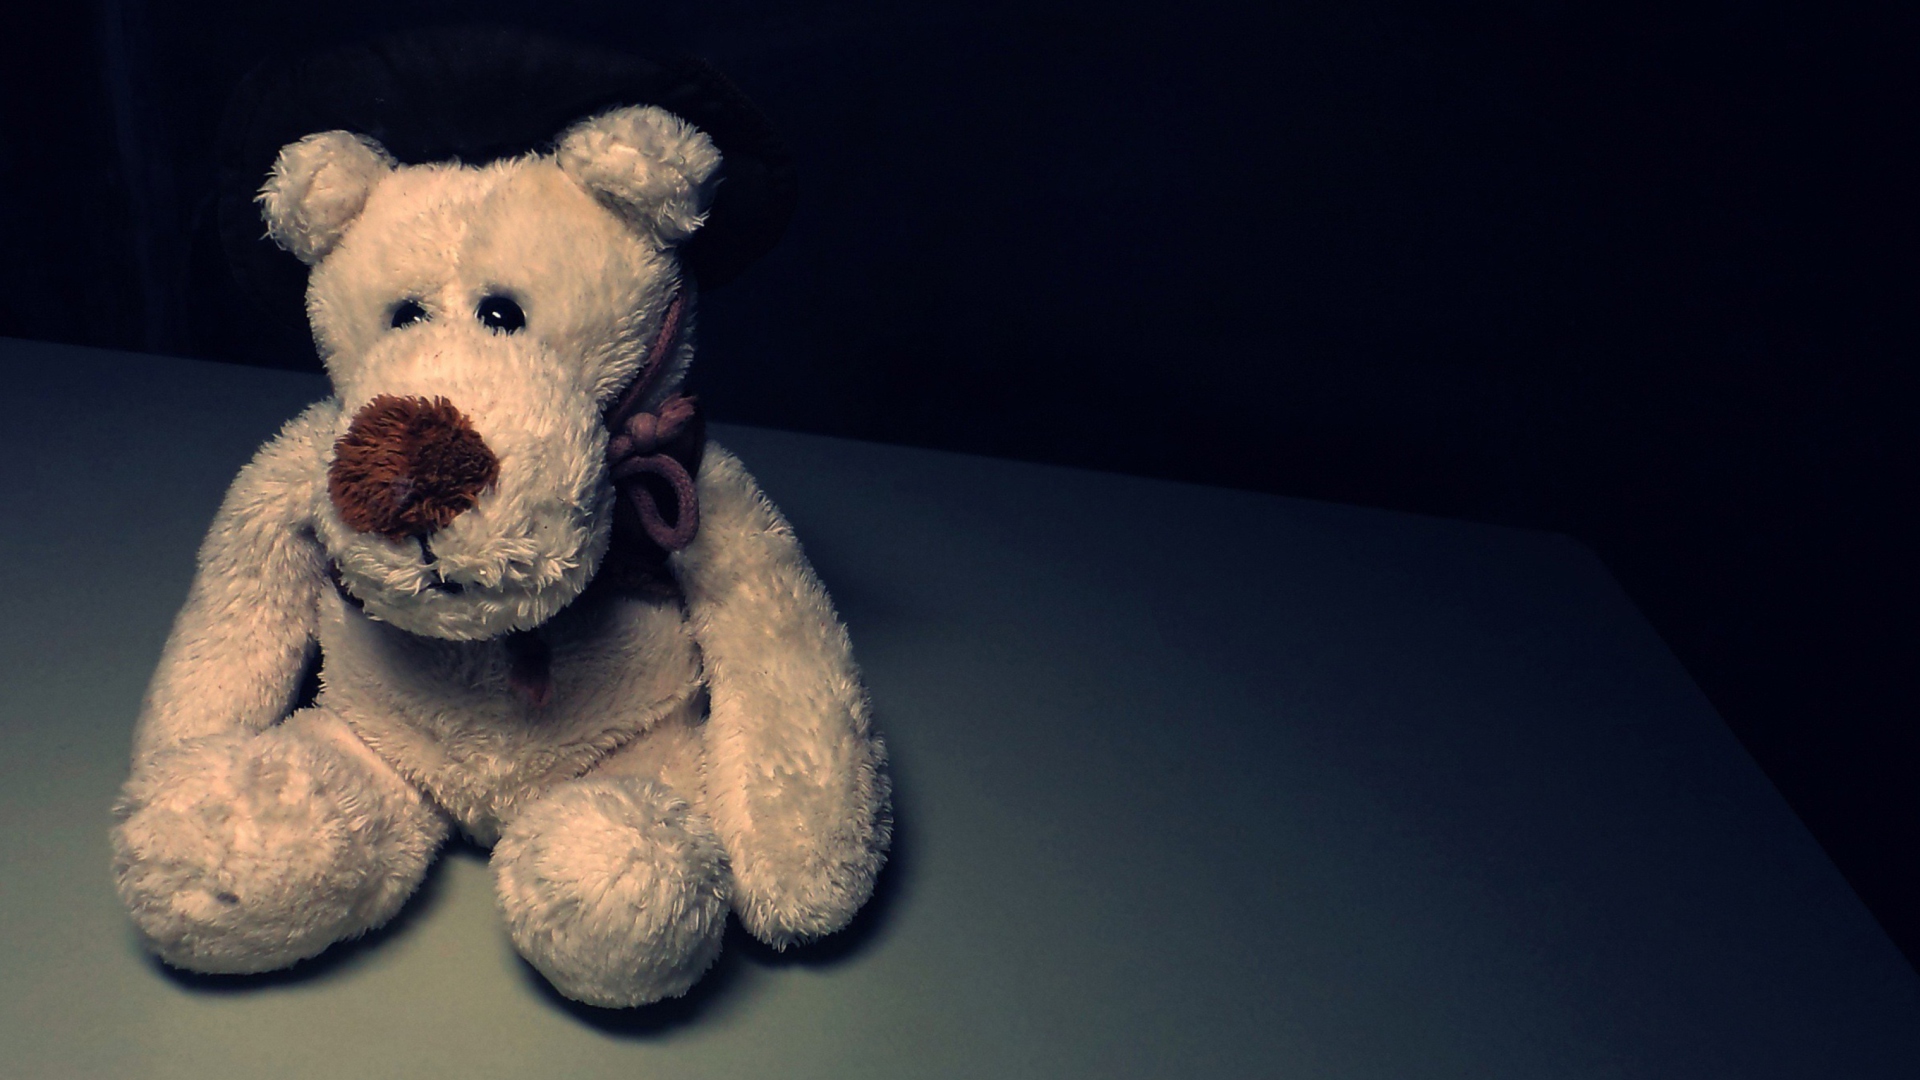 Sad Teddy Bear Sitting Alone wallpaper 1920x1080